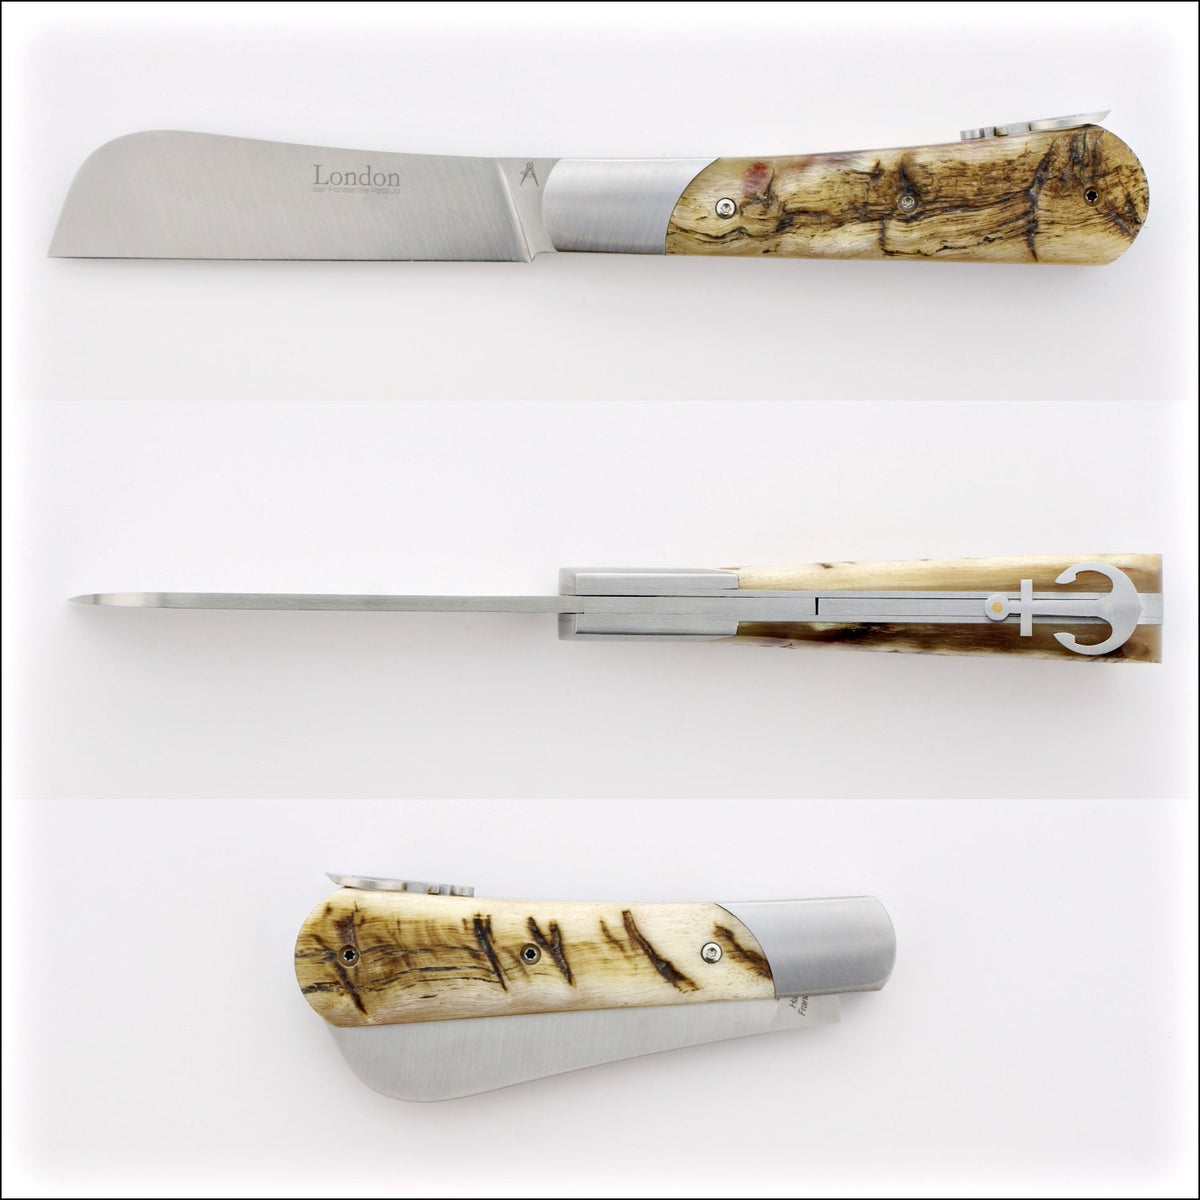 London 11 cm Ram Horn Handle Folding Knife